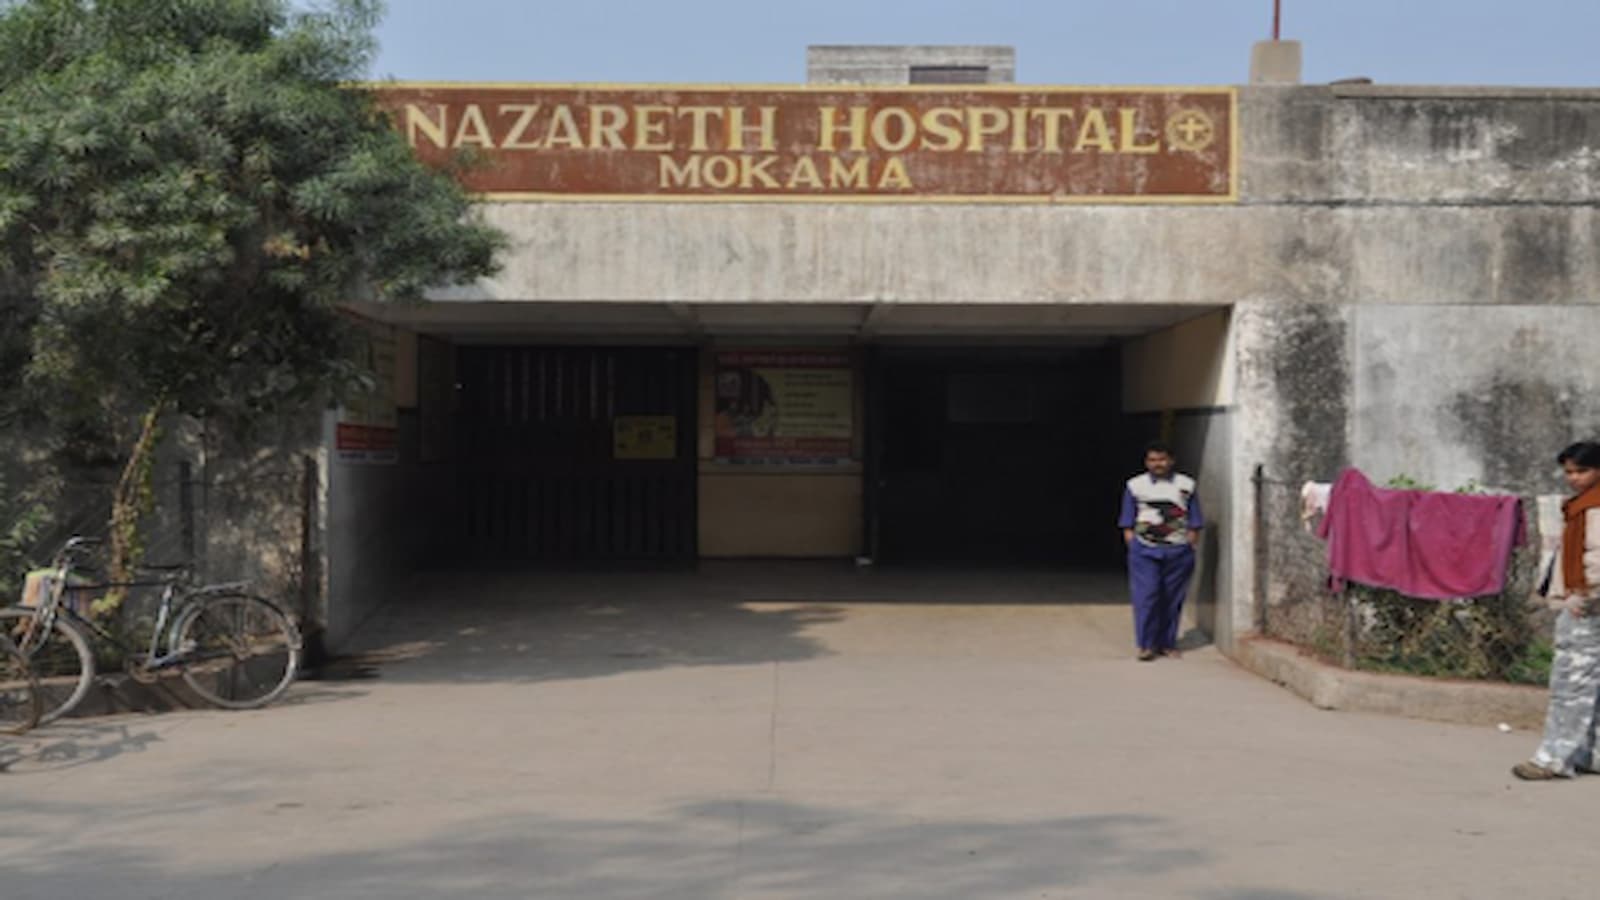 Nazareth Hospital, located in Mokama, Bihar